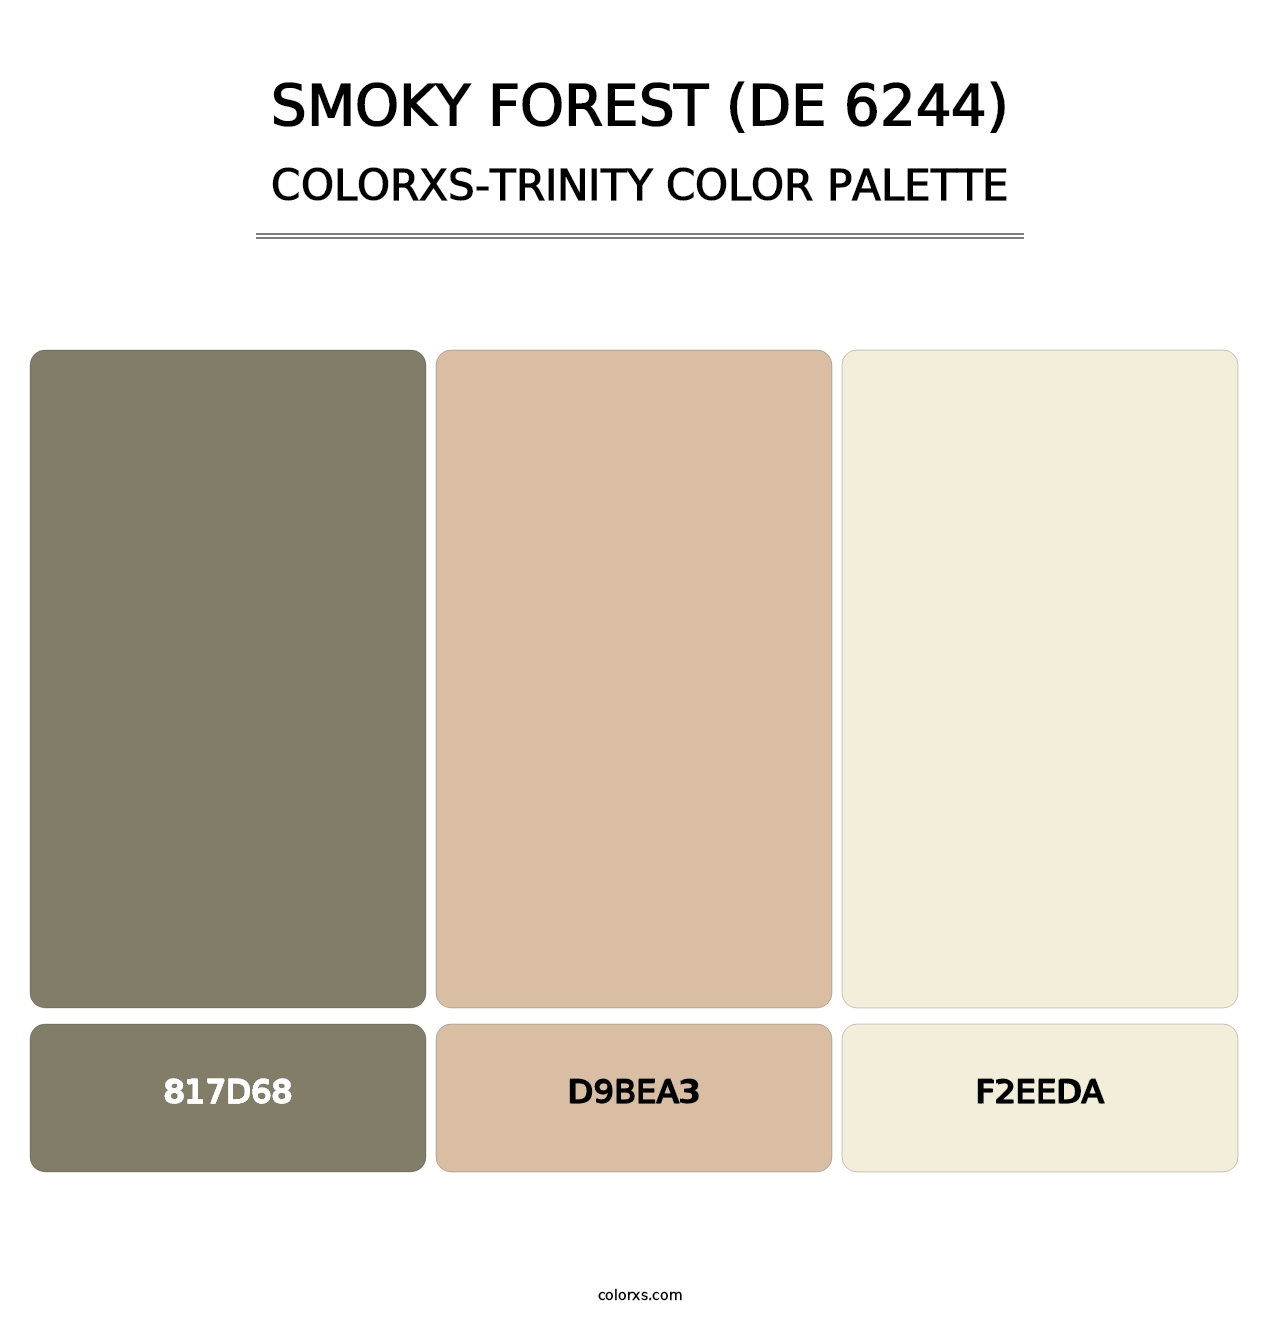 Smoky Forest (DE 6244) - Colorxs Trinity Palette